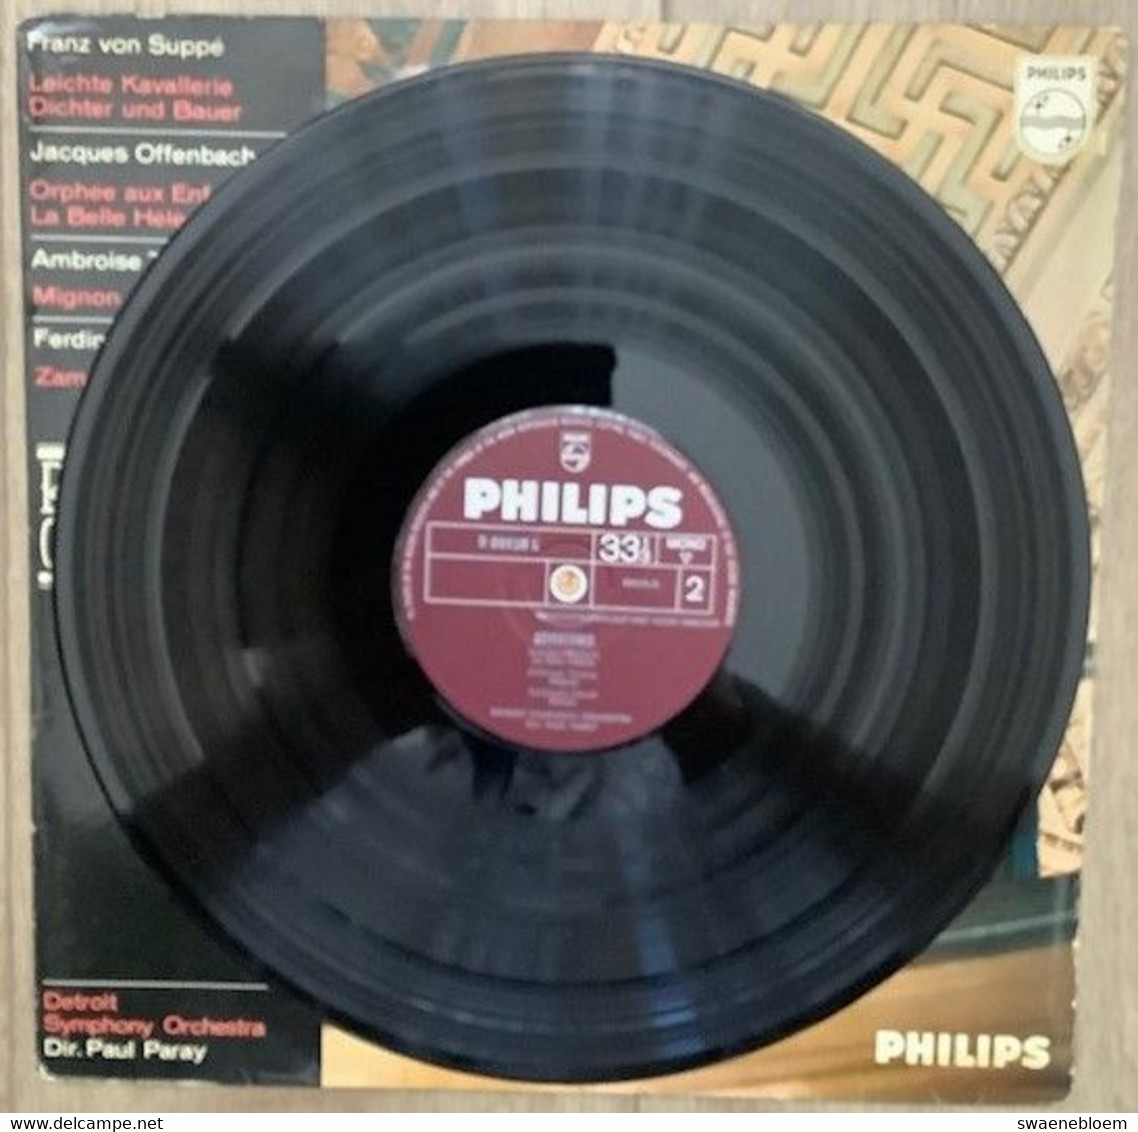 LP.- BEROEMDE OUVERTURES. Detroit Symphony Orchestra. Dir. Paul Paray. - Collector's Editions